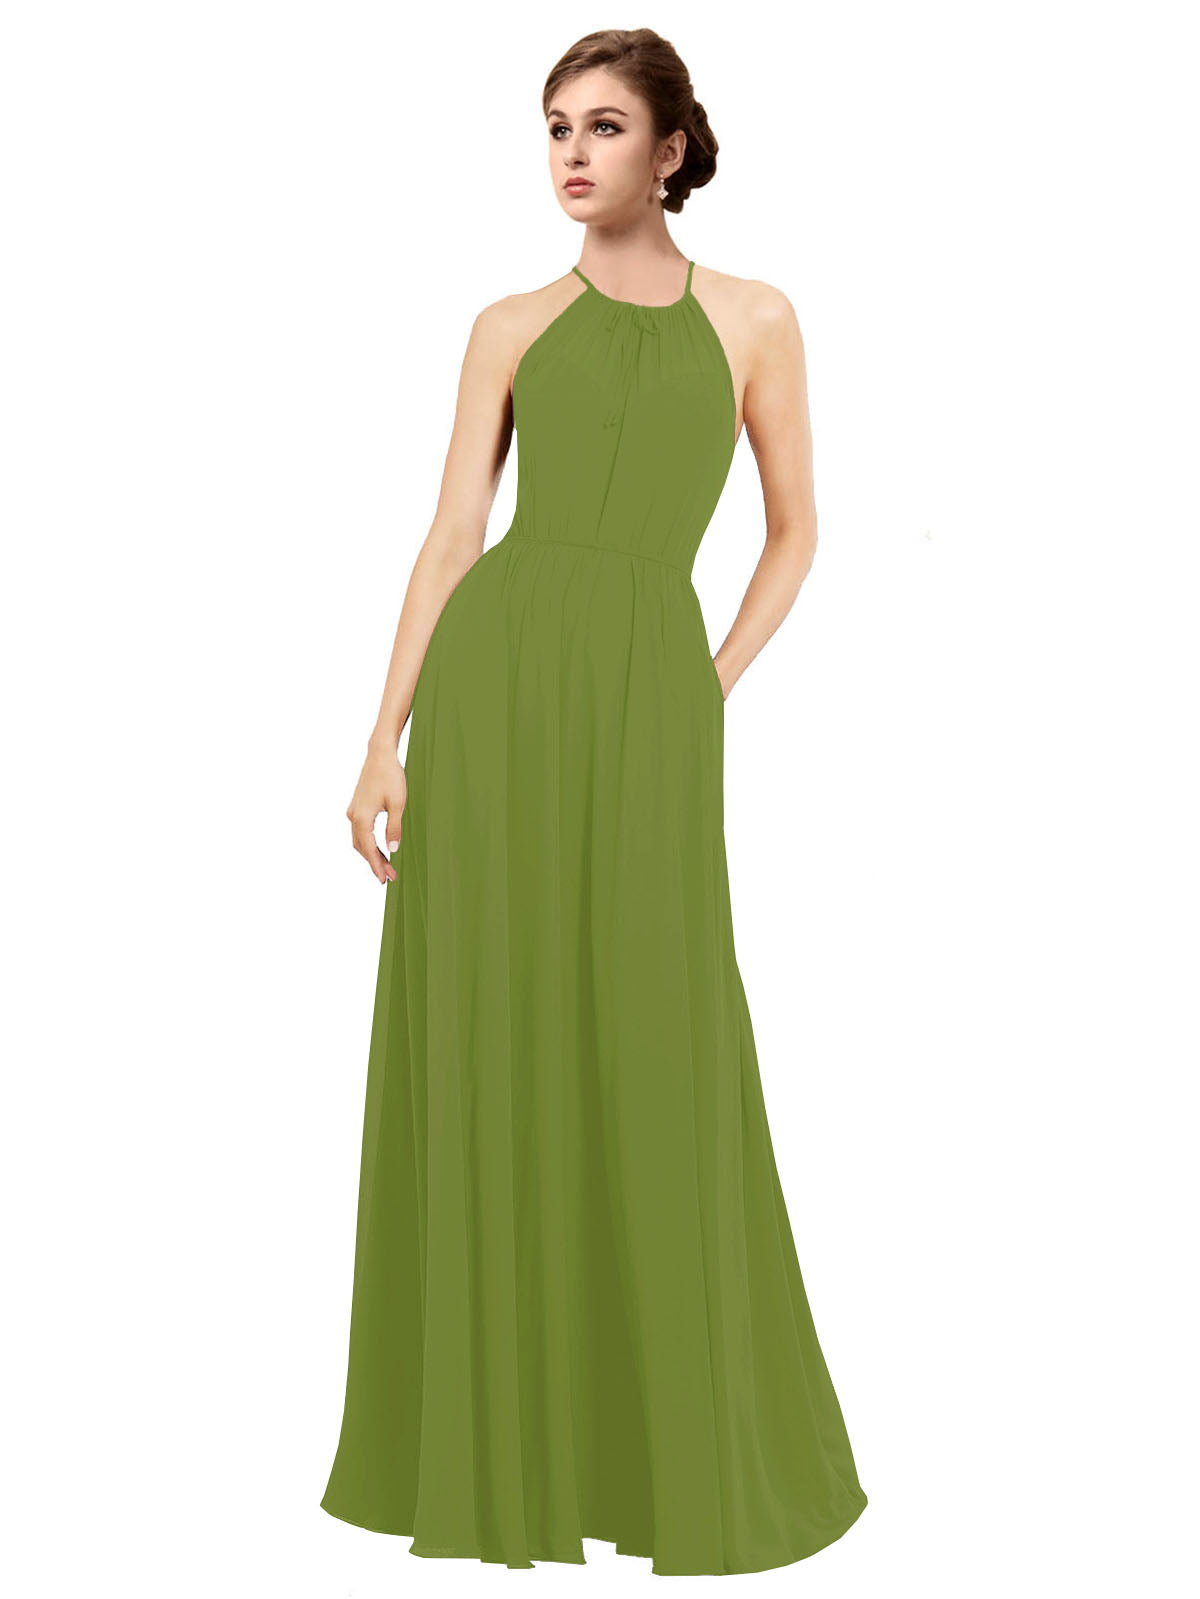 Olive Green A-Line Halter Sleeveless Long Bridesmaid Dress Taylor